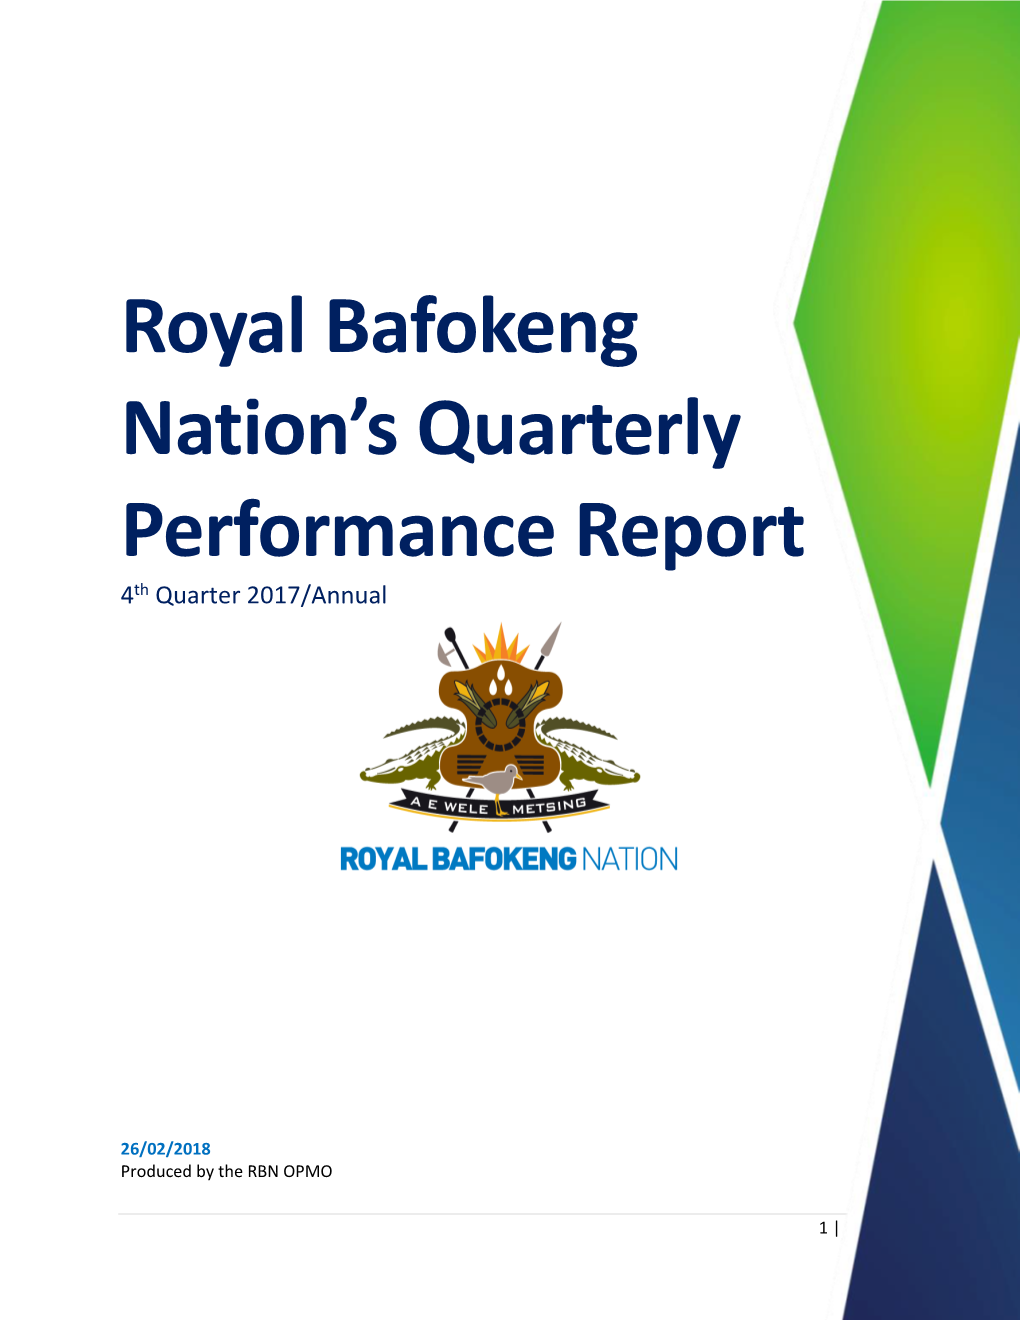 Royal Bafokeng Nation's Quarterly Performance Report